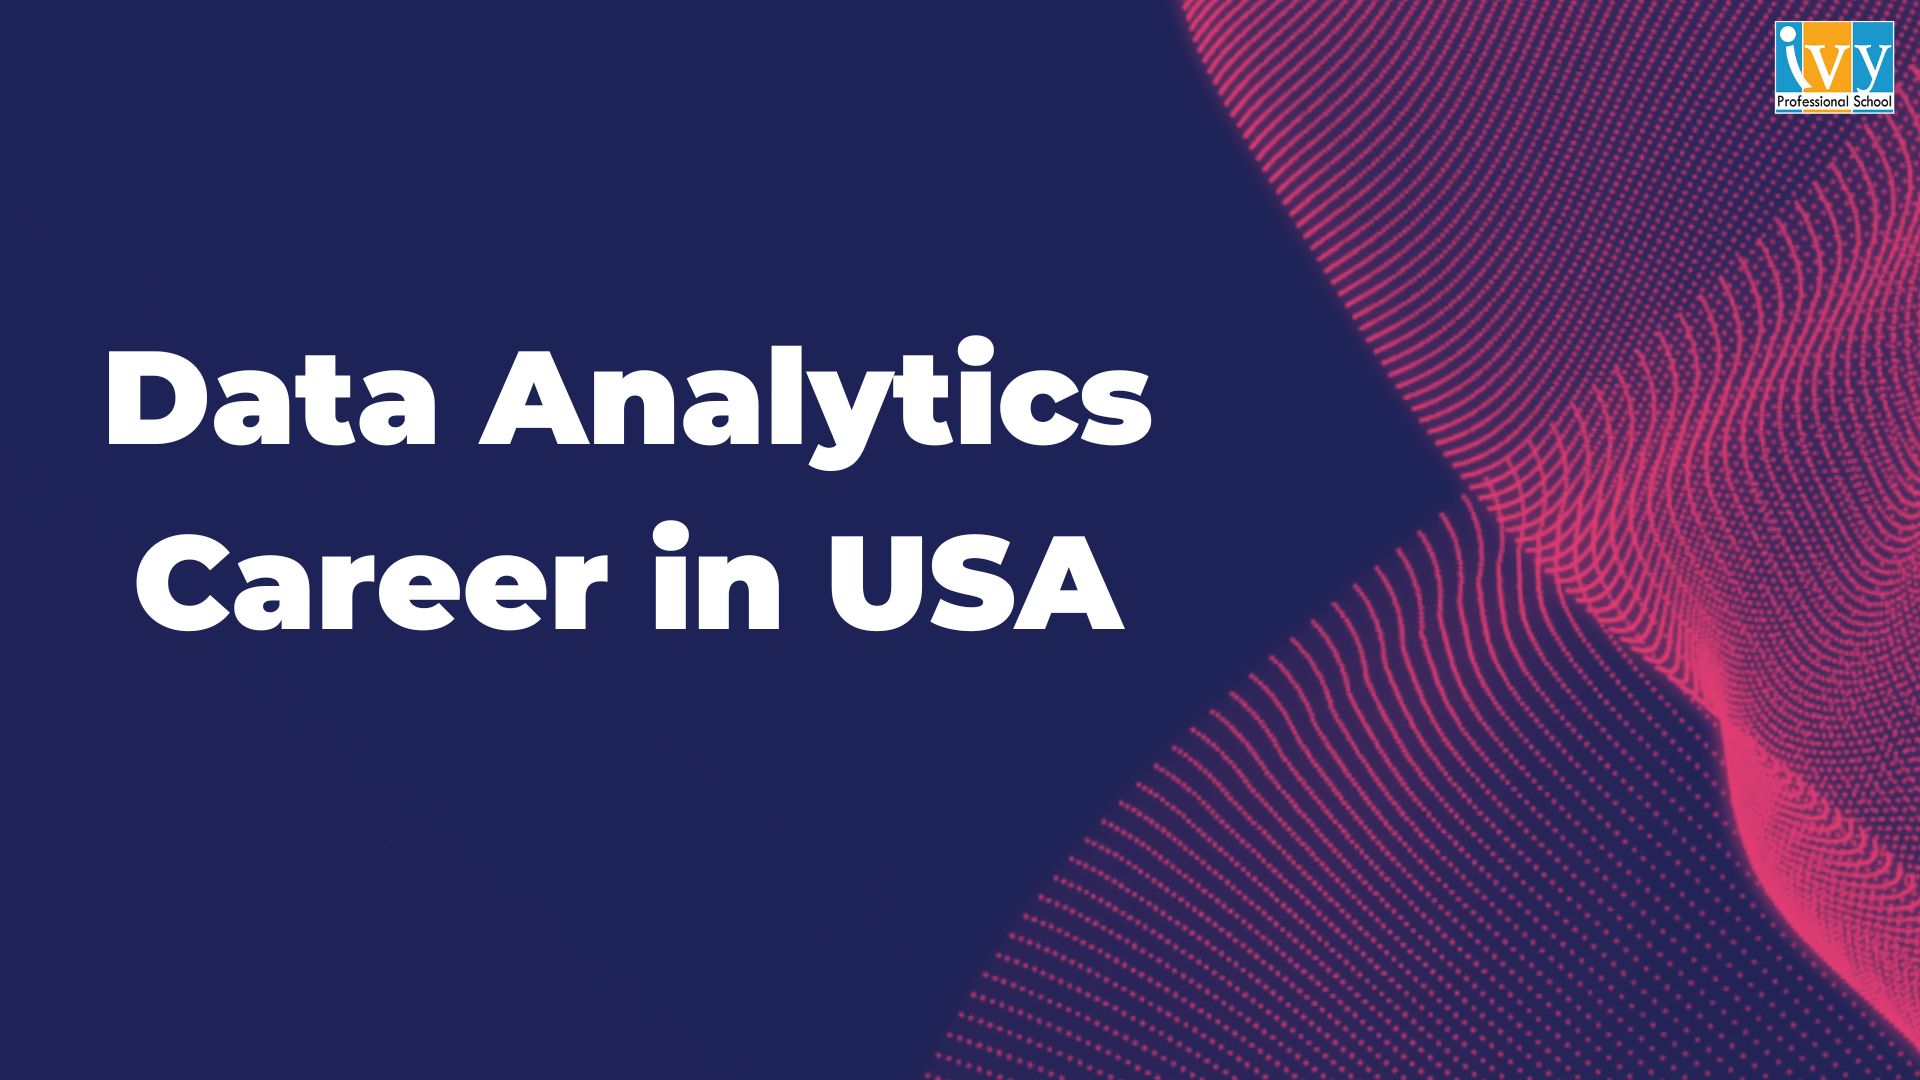 Data Analytics career in USA